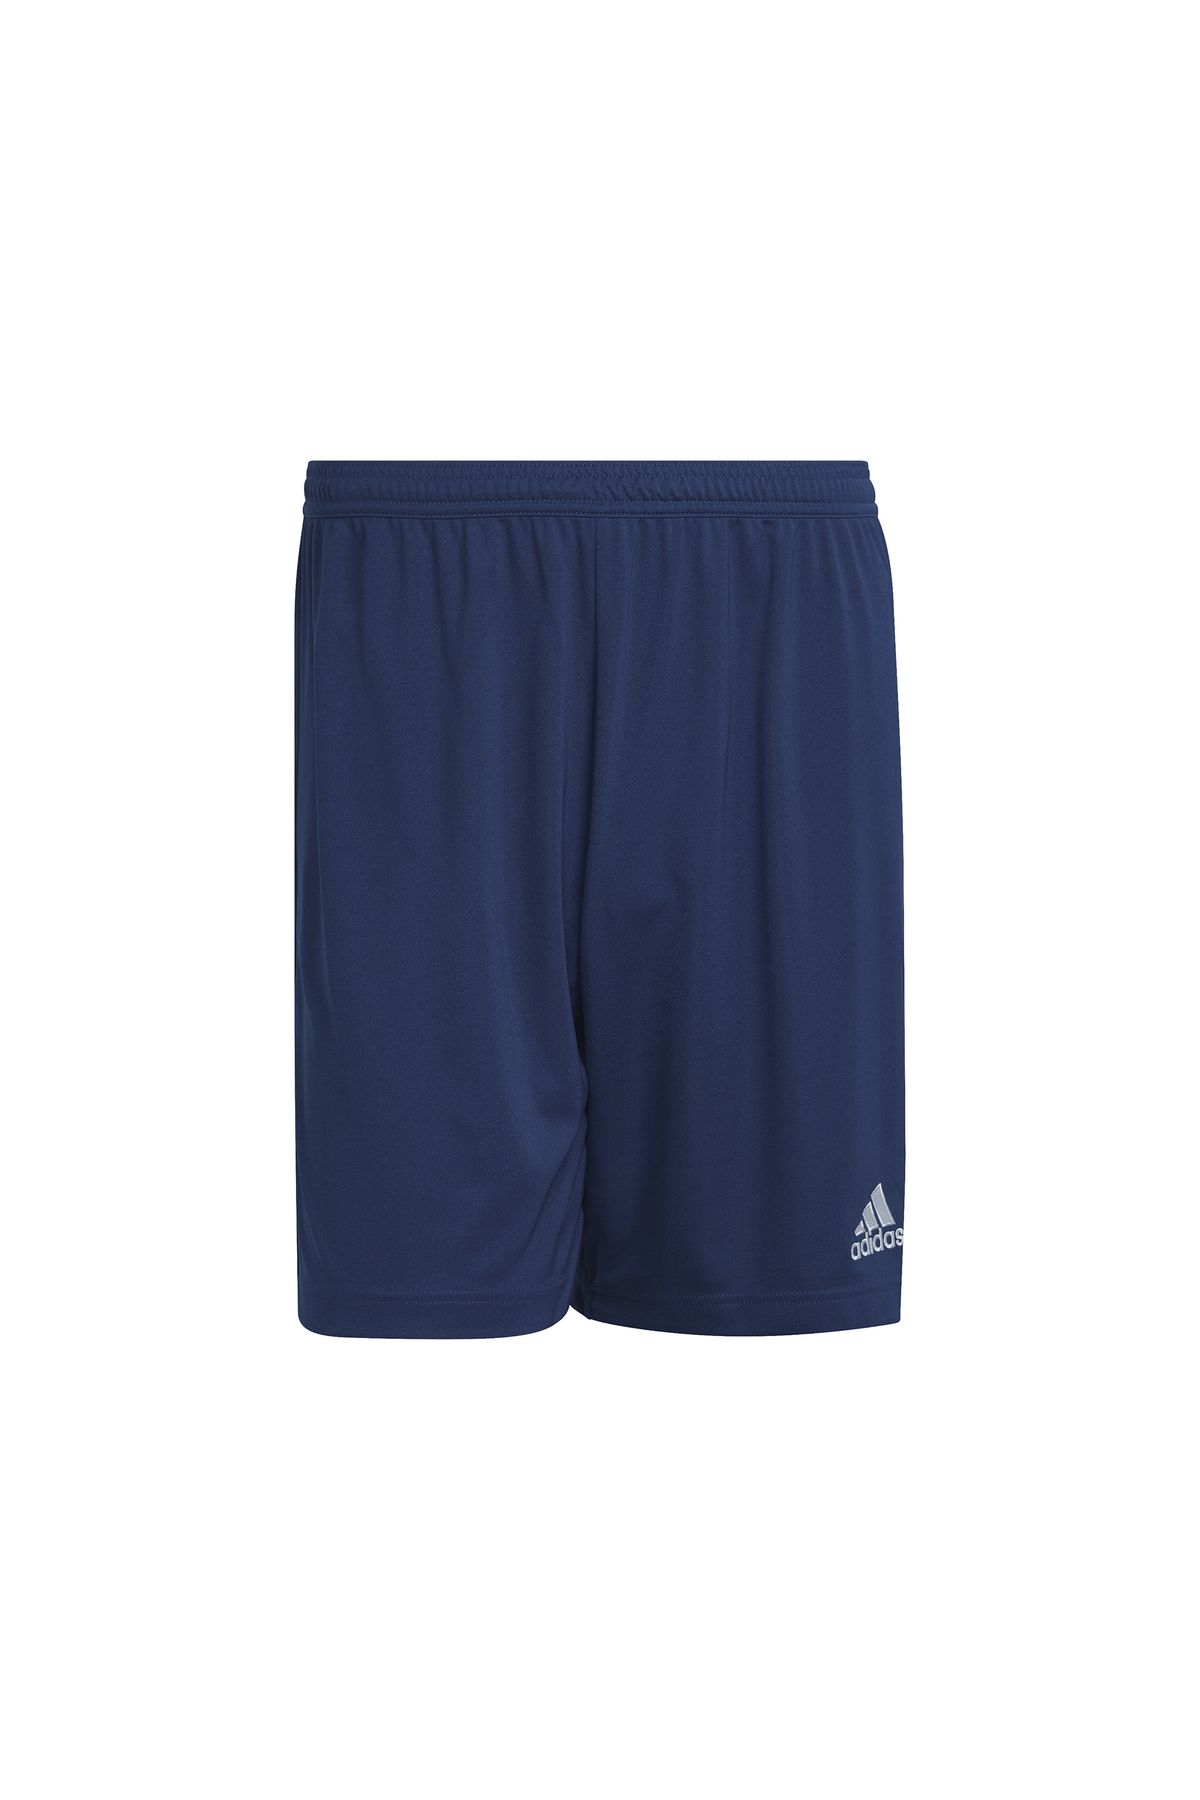 adidas Ent22 Navy - Blue Sho H57506 Shorts Trendyol Men\'s